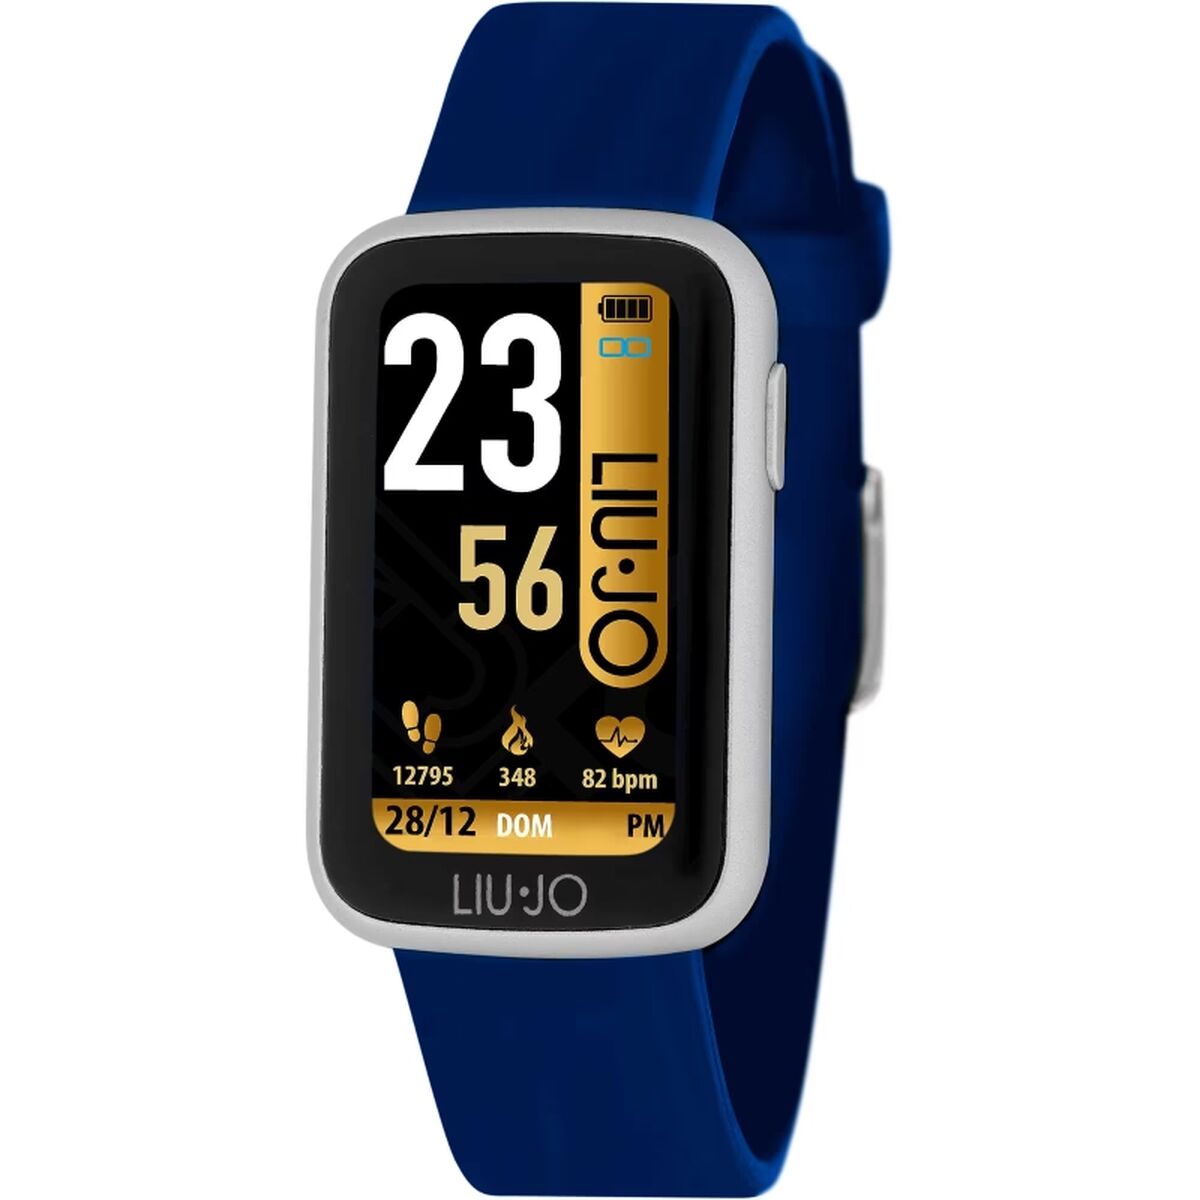 Kaufe Smartwatch LIU JO SWLJ040 Blau bei AWK Flagship um € 123.00